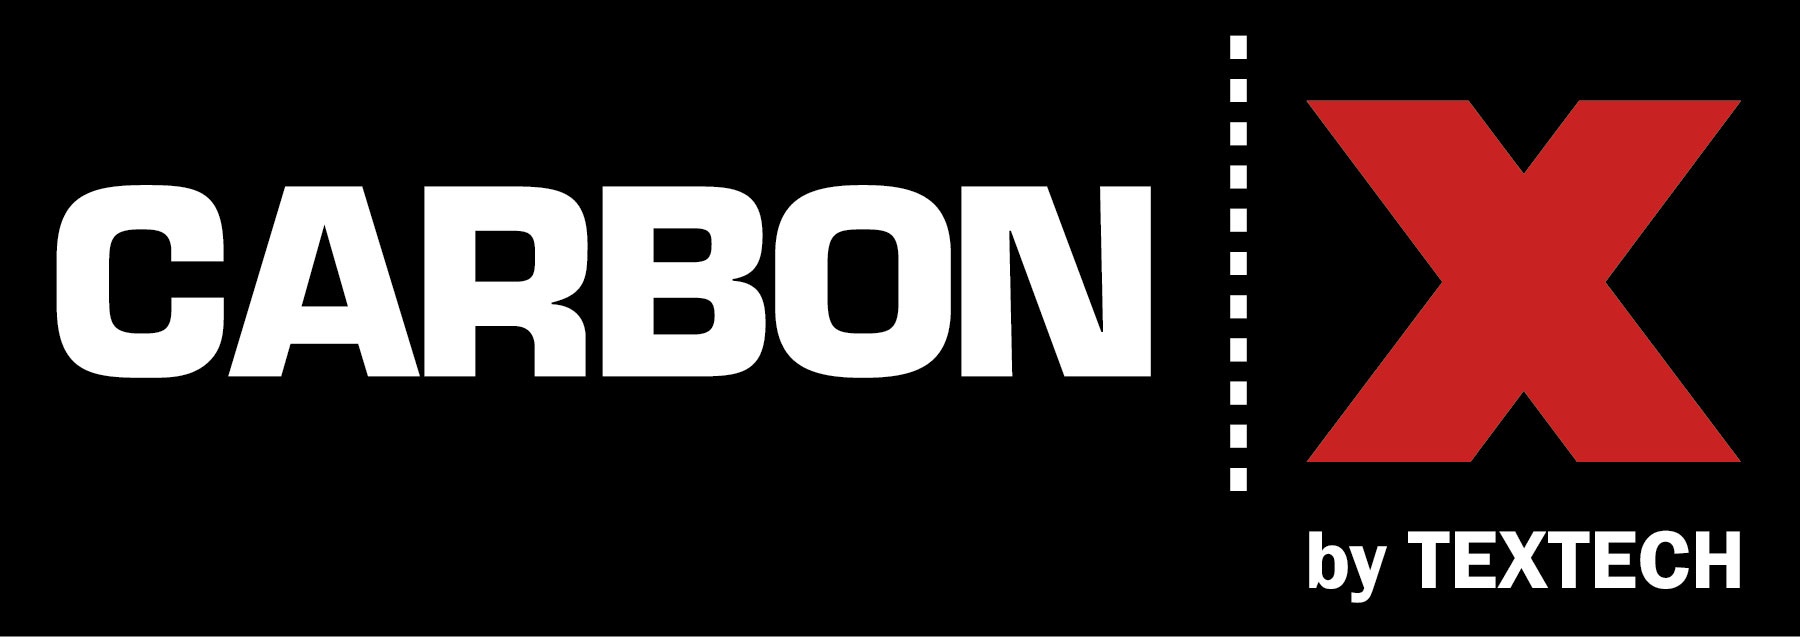 CarbonX logo